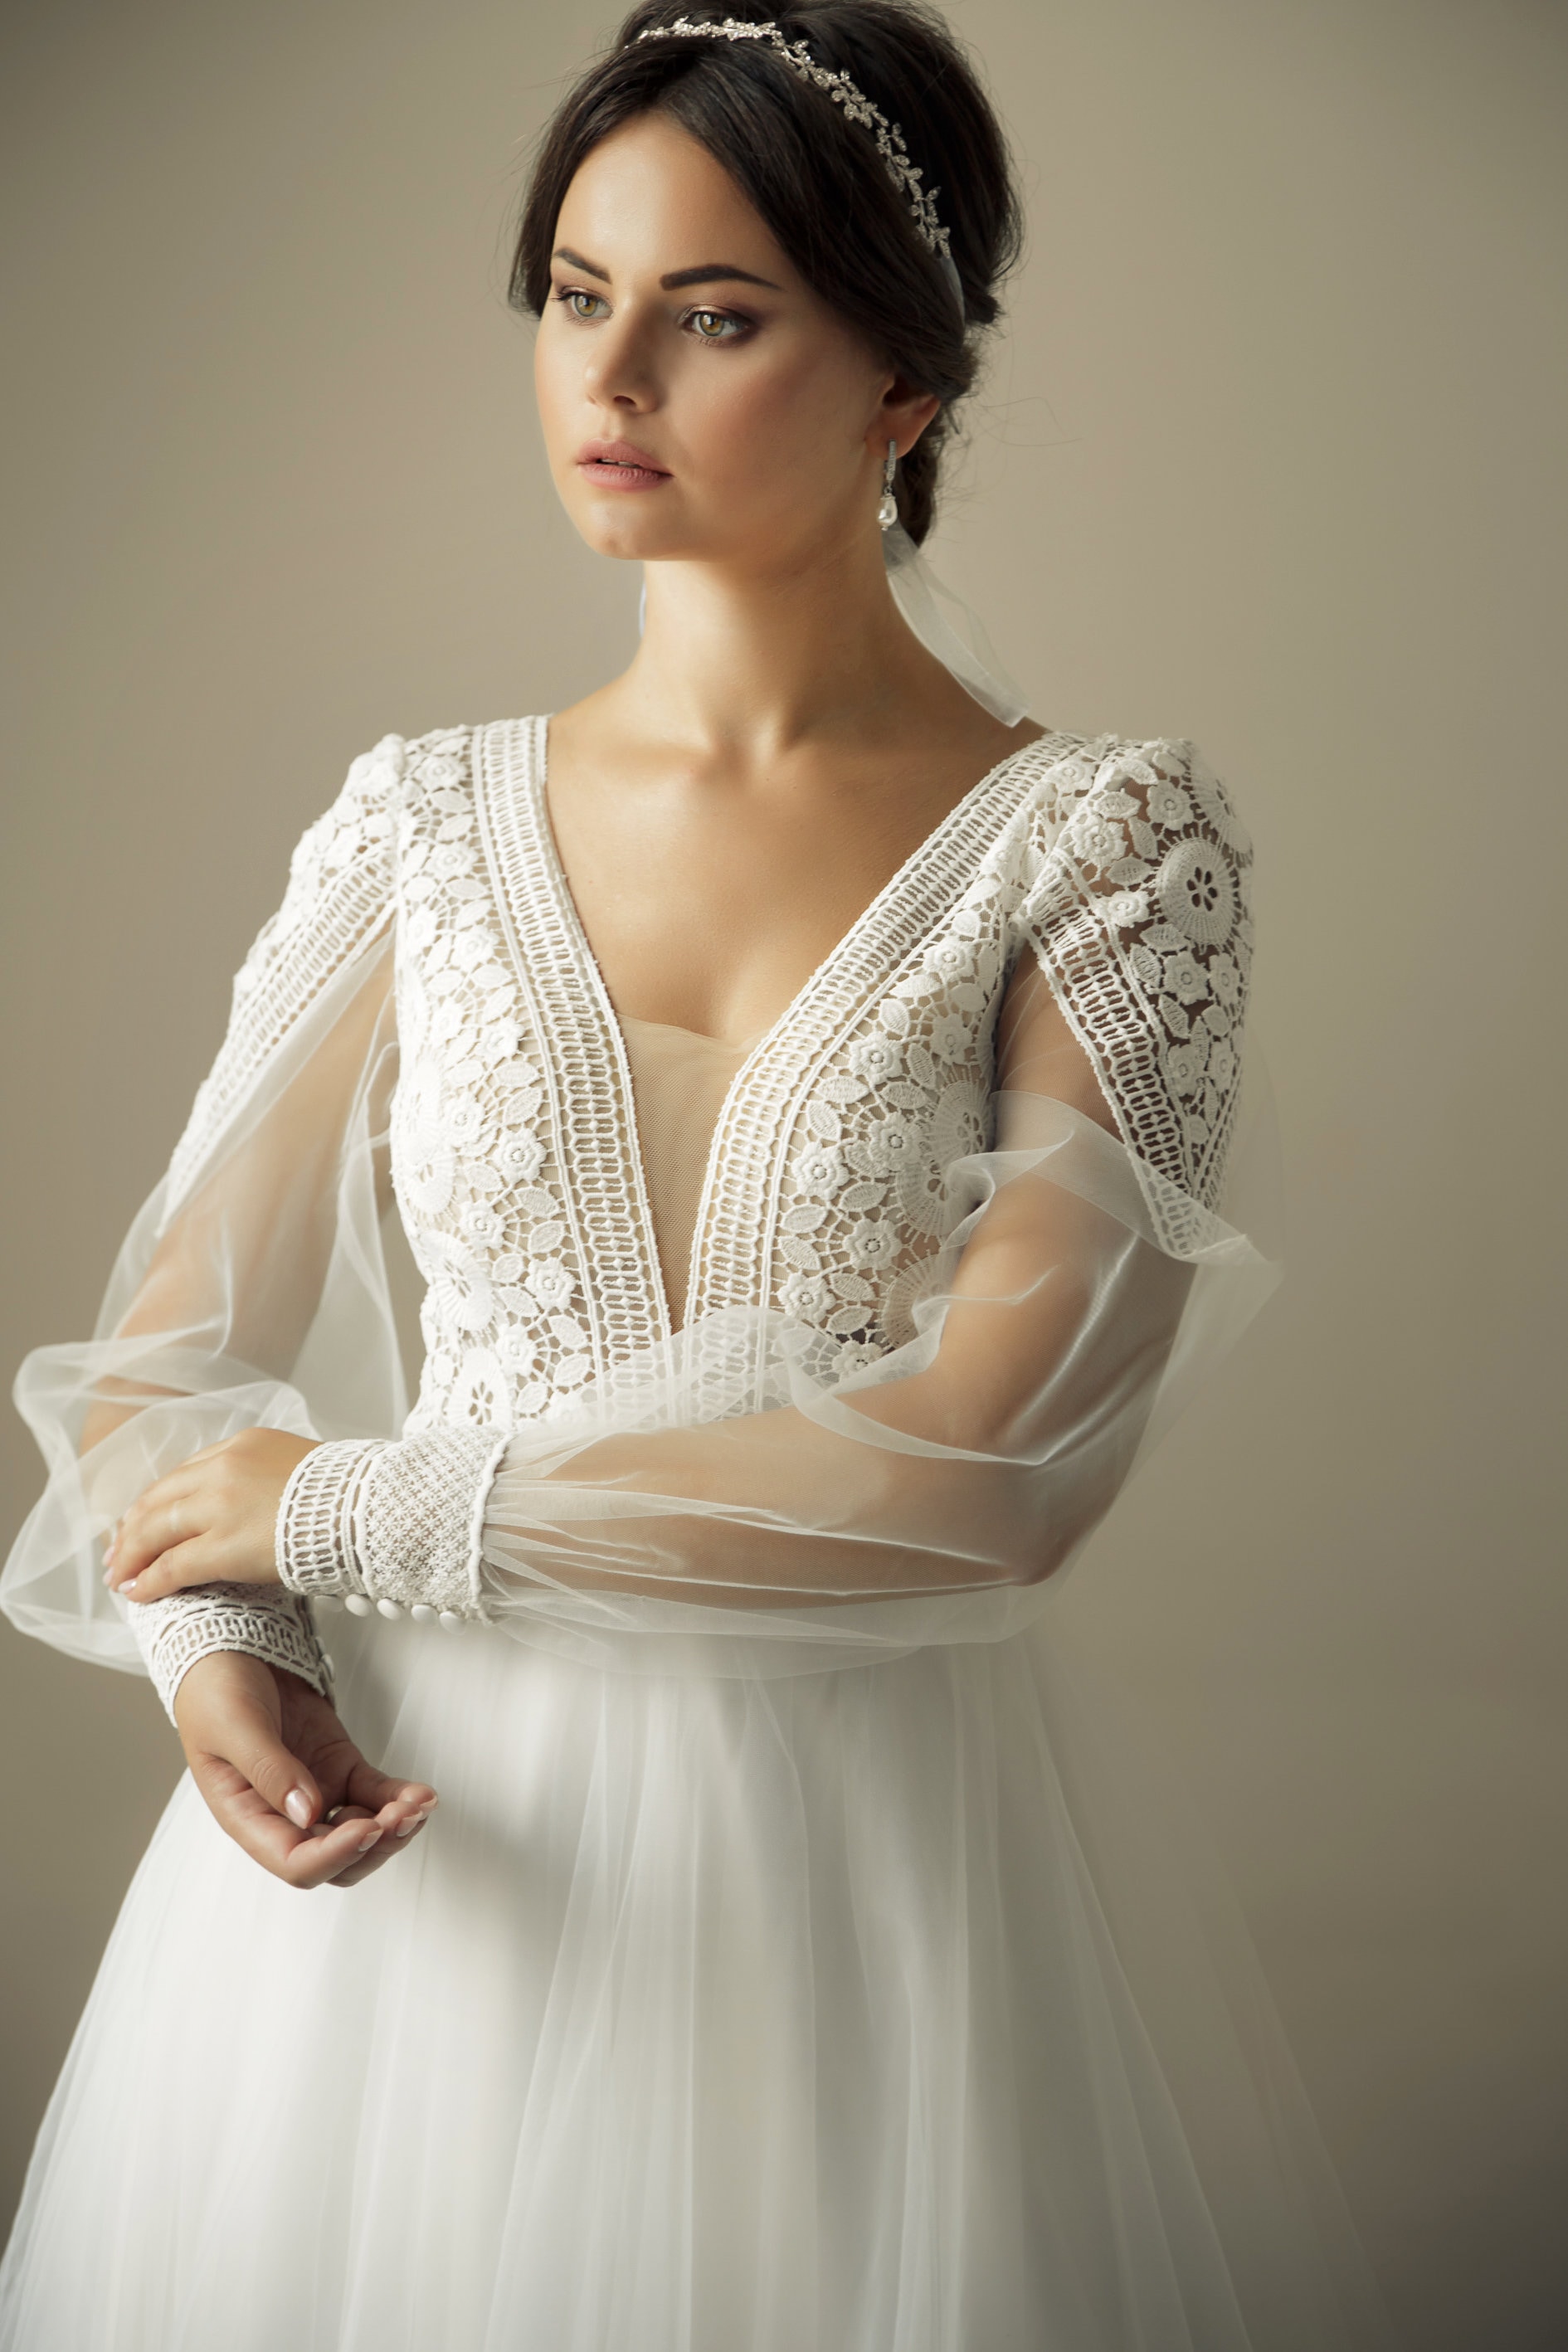 Wide Long Sleeves Wedding Dress Romantic Vintage Wedding Dress | Etsy